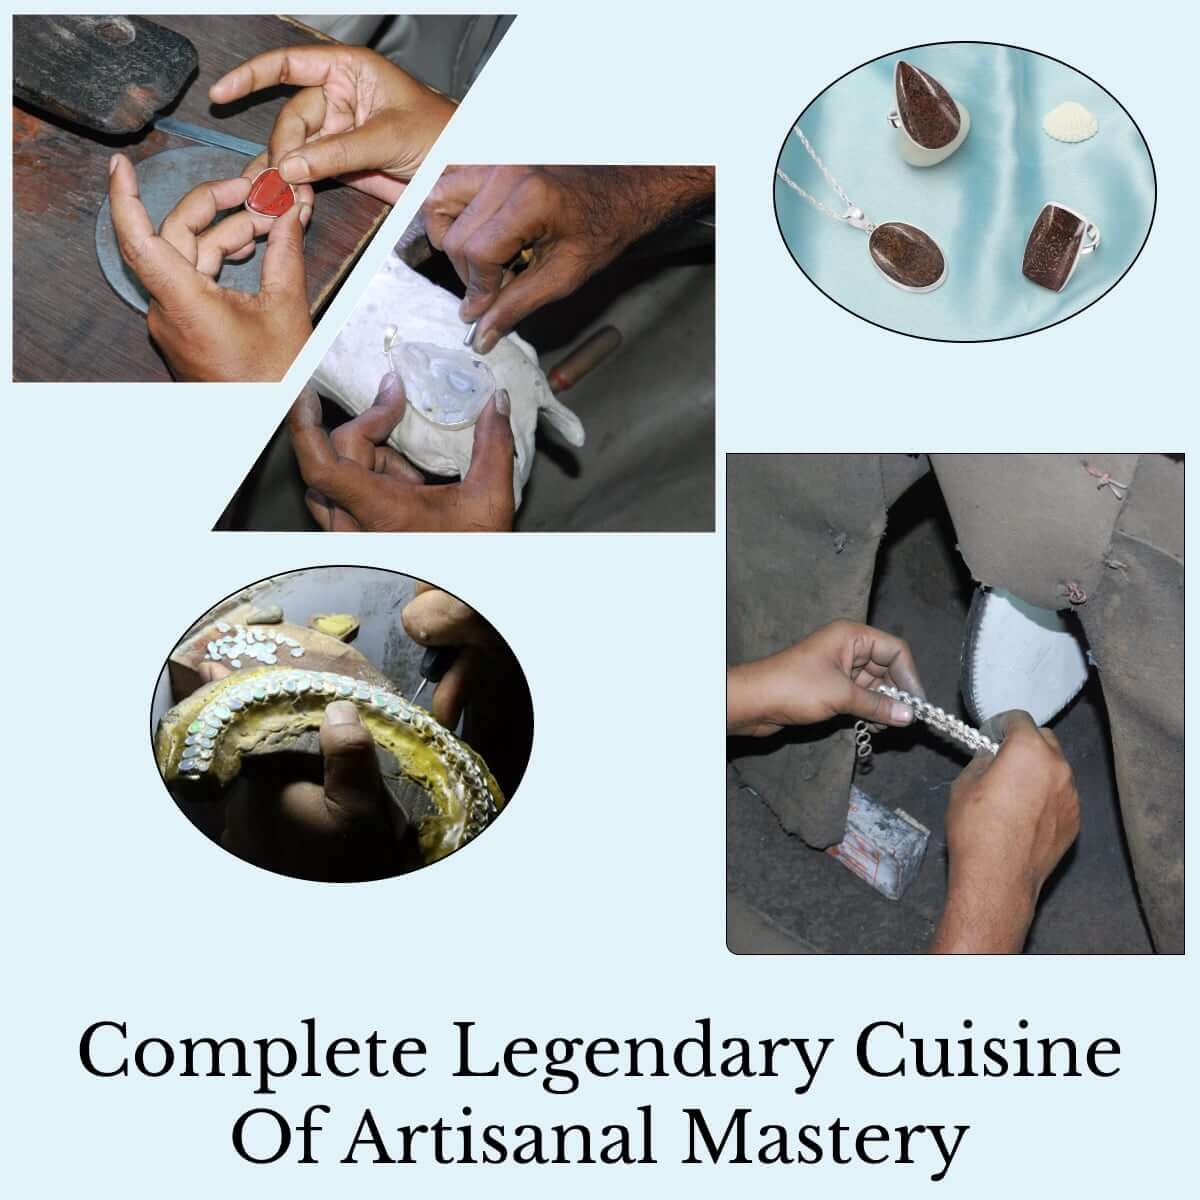 Plating Artisanal Mastery made by Handmade Jewelry garnish with Distinctive Style